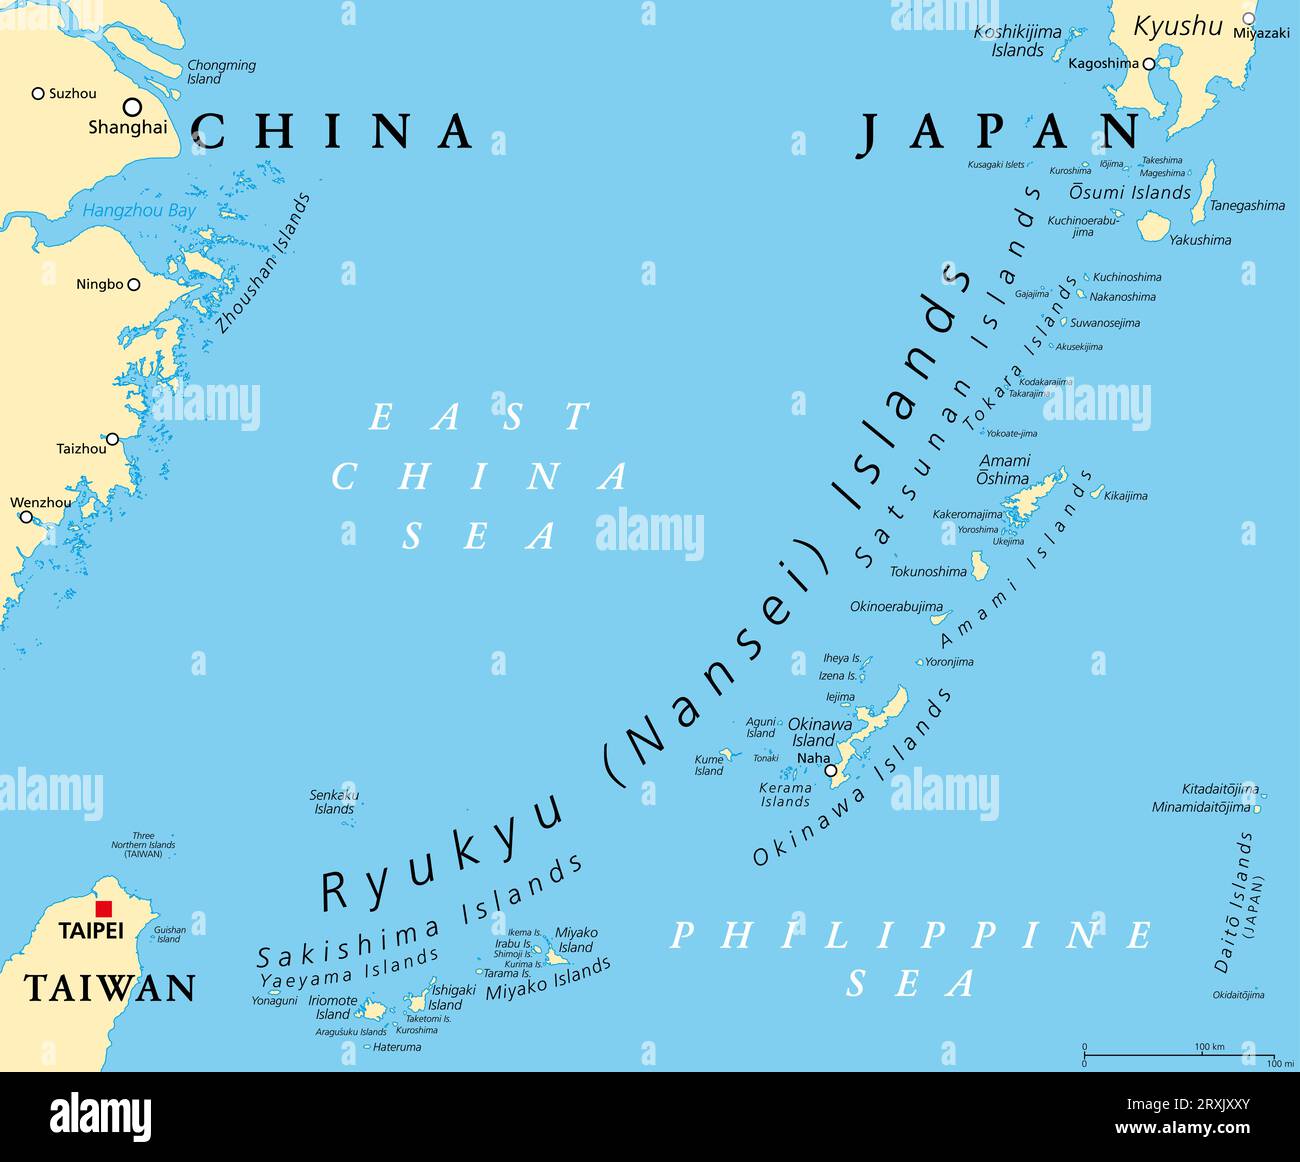 Ryukyu Islands, also known as Nansei Islands, political map. The Ryukyu Arc, a Japanese, mostly volcanic island chain stretching from Kyushu to Taiwan. Stock Photo